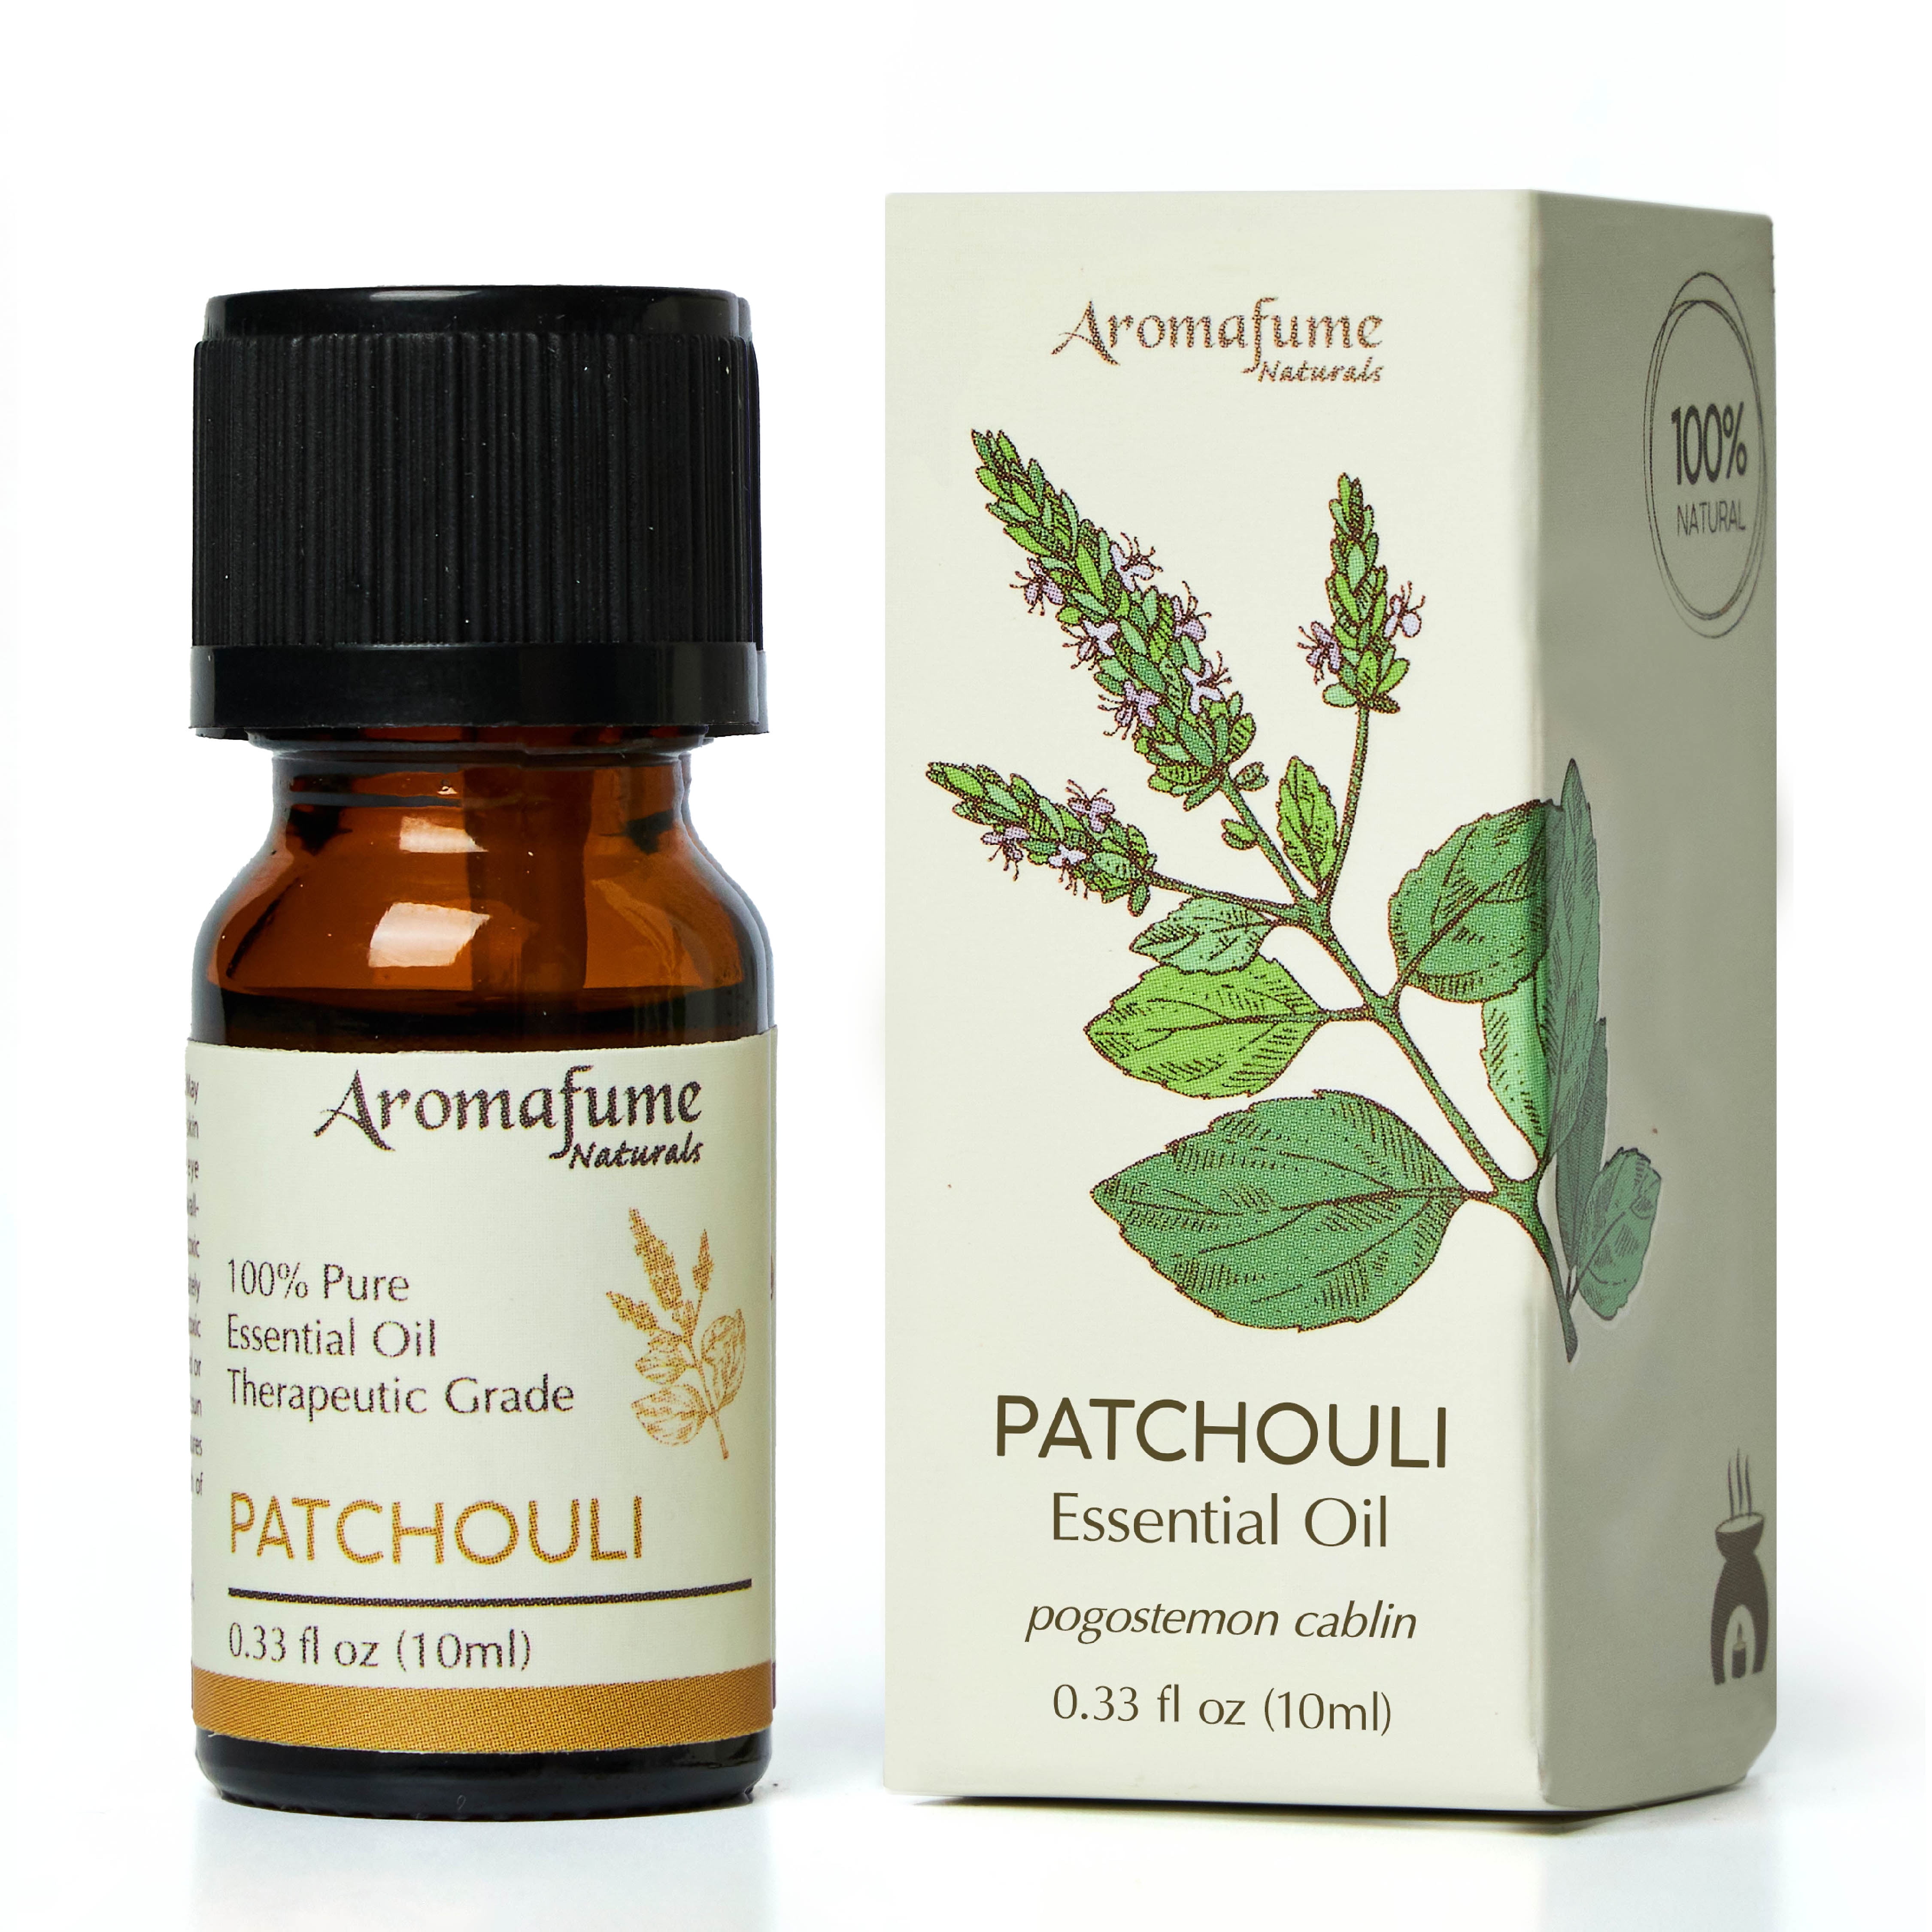 AROMAFUME Patchouli Essential Oil - 100% Natural Essential Oils